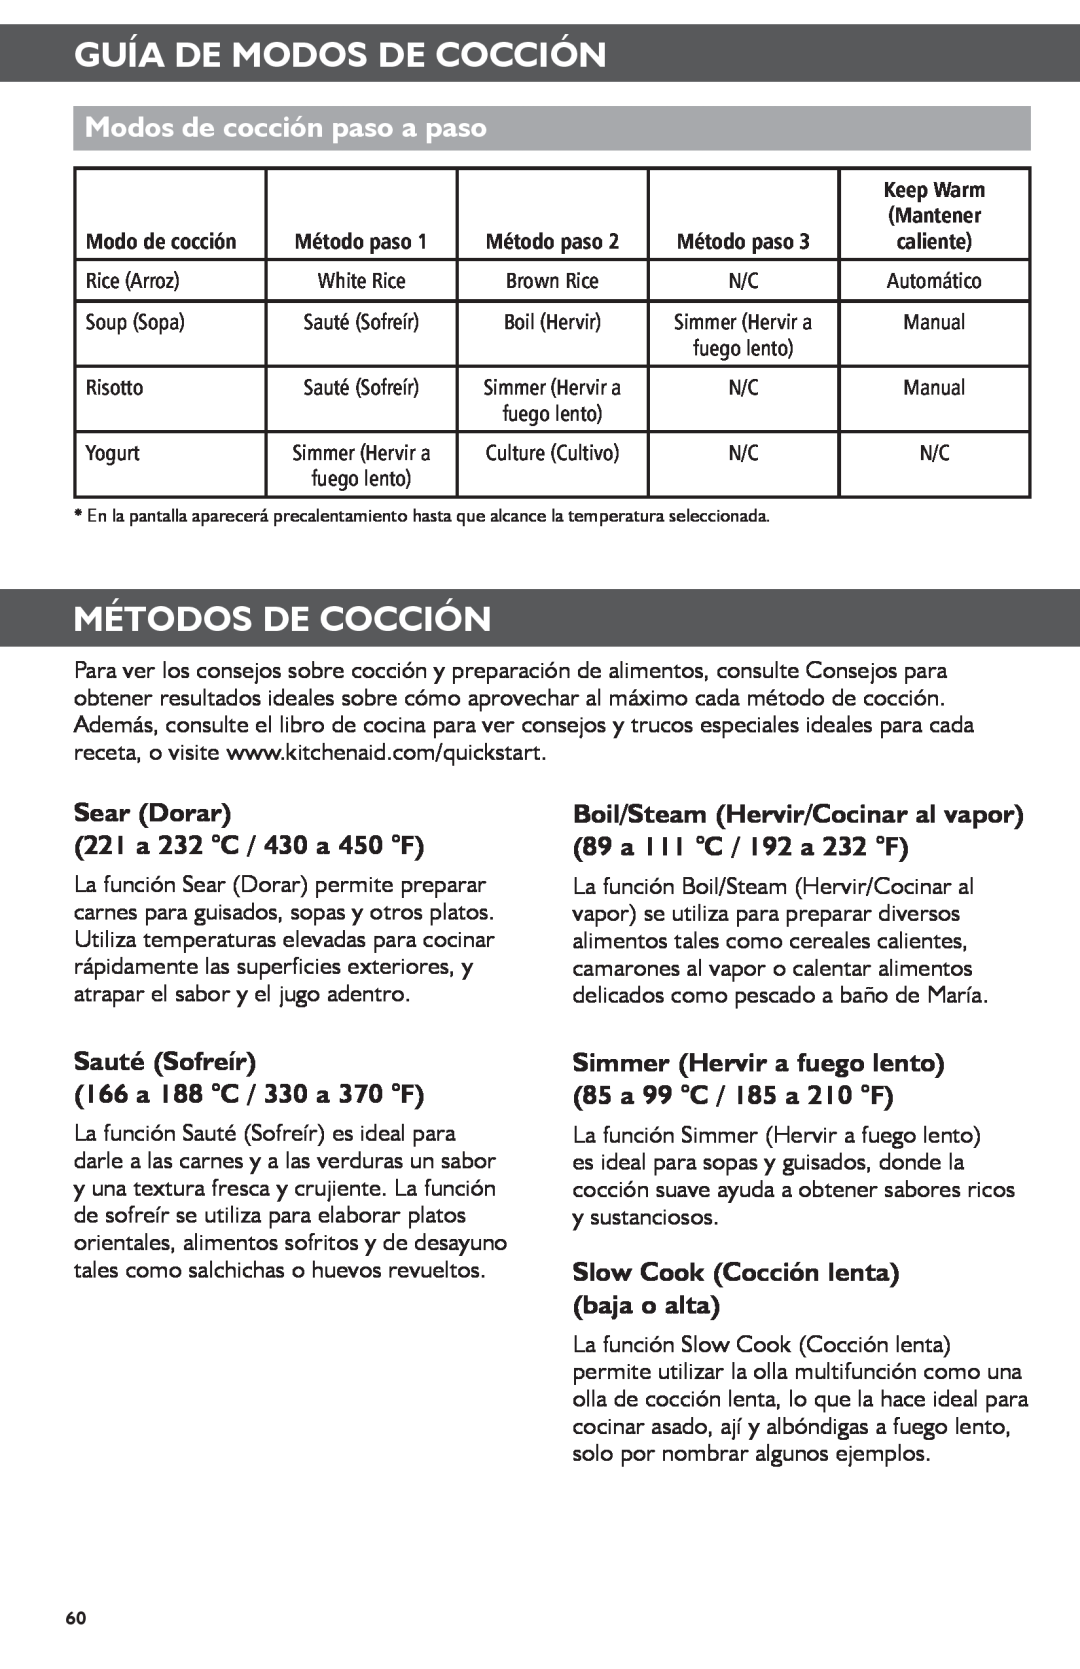 KitchenAid KMC4241 manual Métodos De Cocción, Modos de cocción paso a paso, Sear Dorar 221 a 232 C / 430 a 450 F 